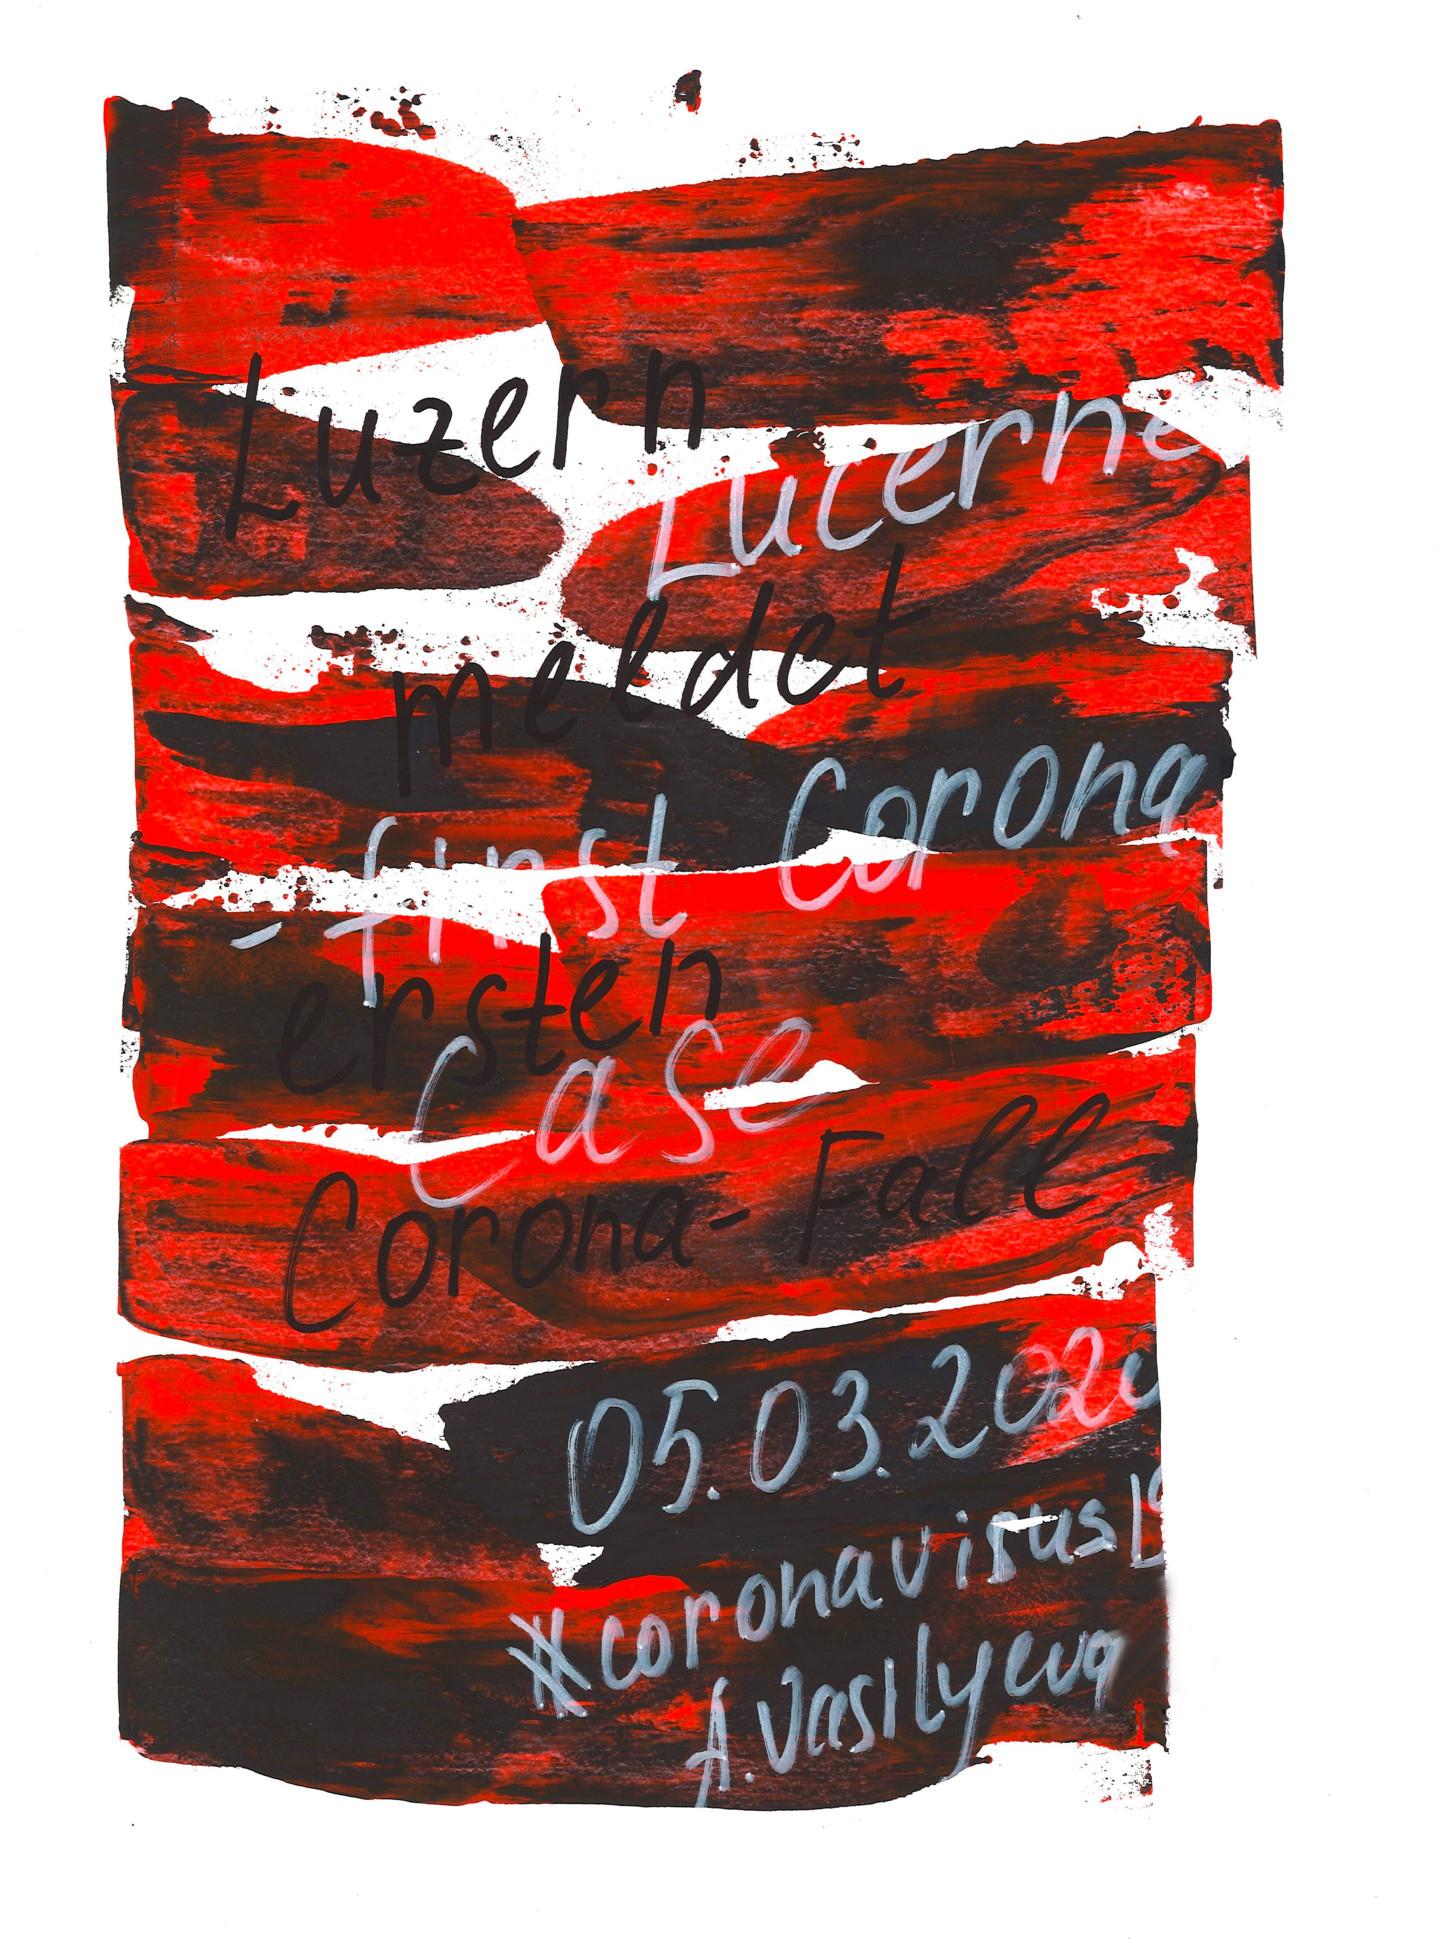 Anastasia Vasilyeva Abstract Drawing - 05.03.2020 - Lucerne has First Corona Case. COVID-19 Painting, 2020